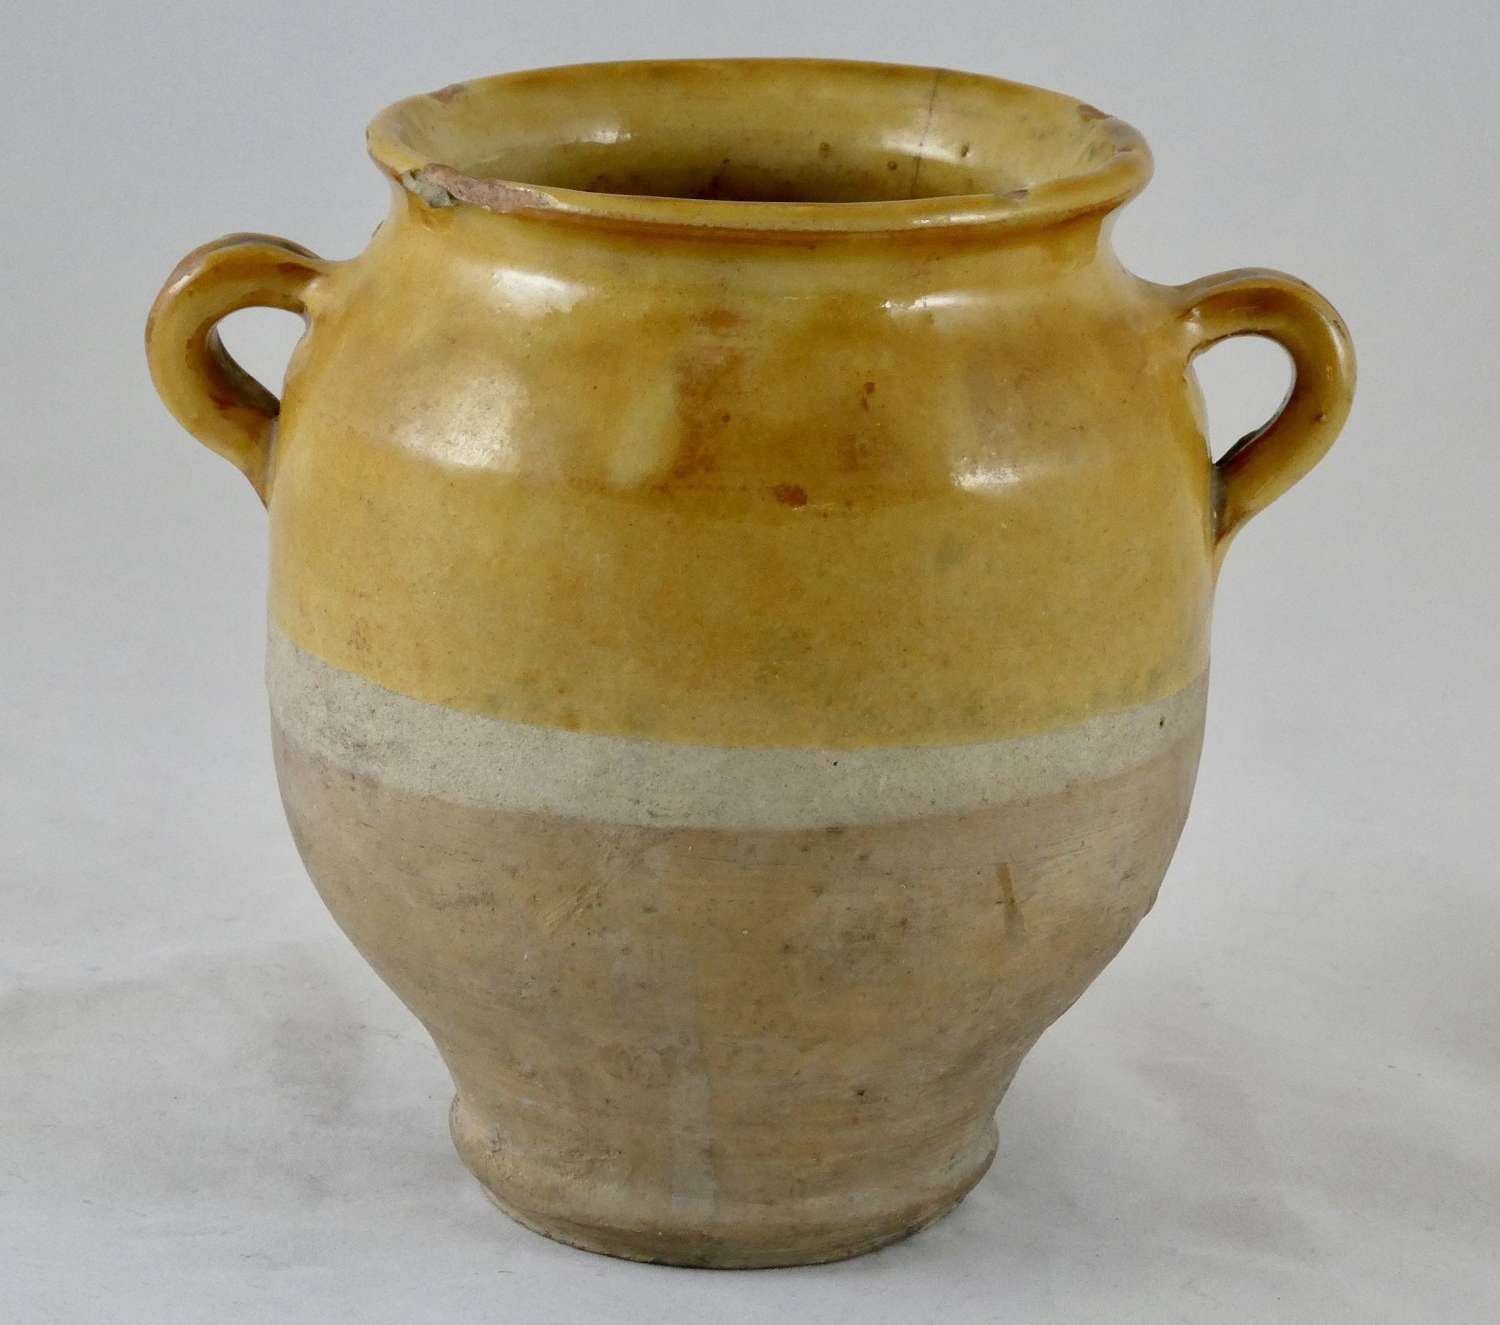 Small 19th century Confit Pot